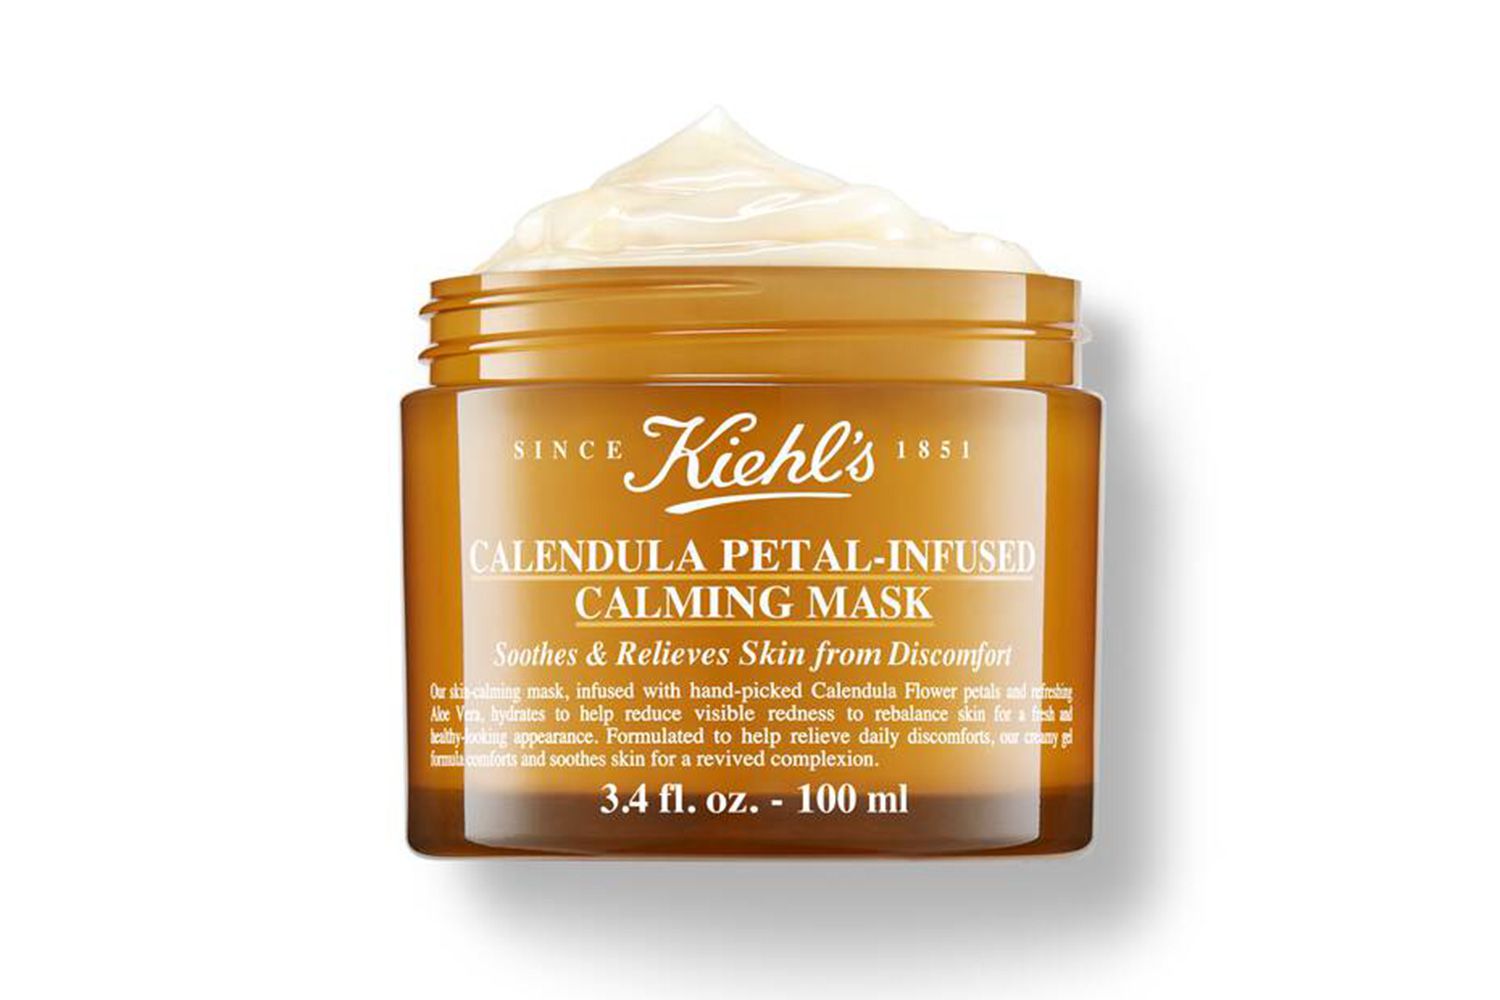 Kiehl's Calendula Petal-Infusion Calming Mask